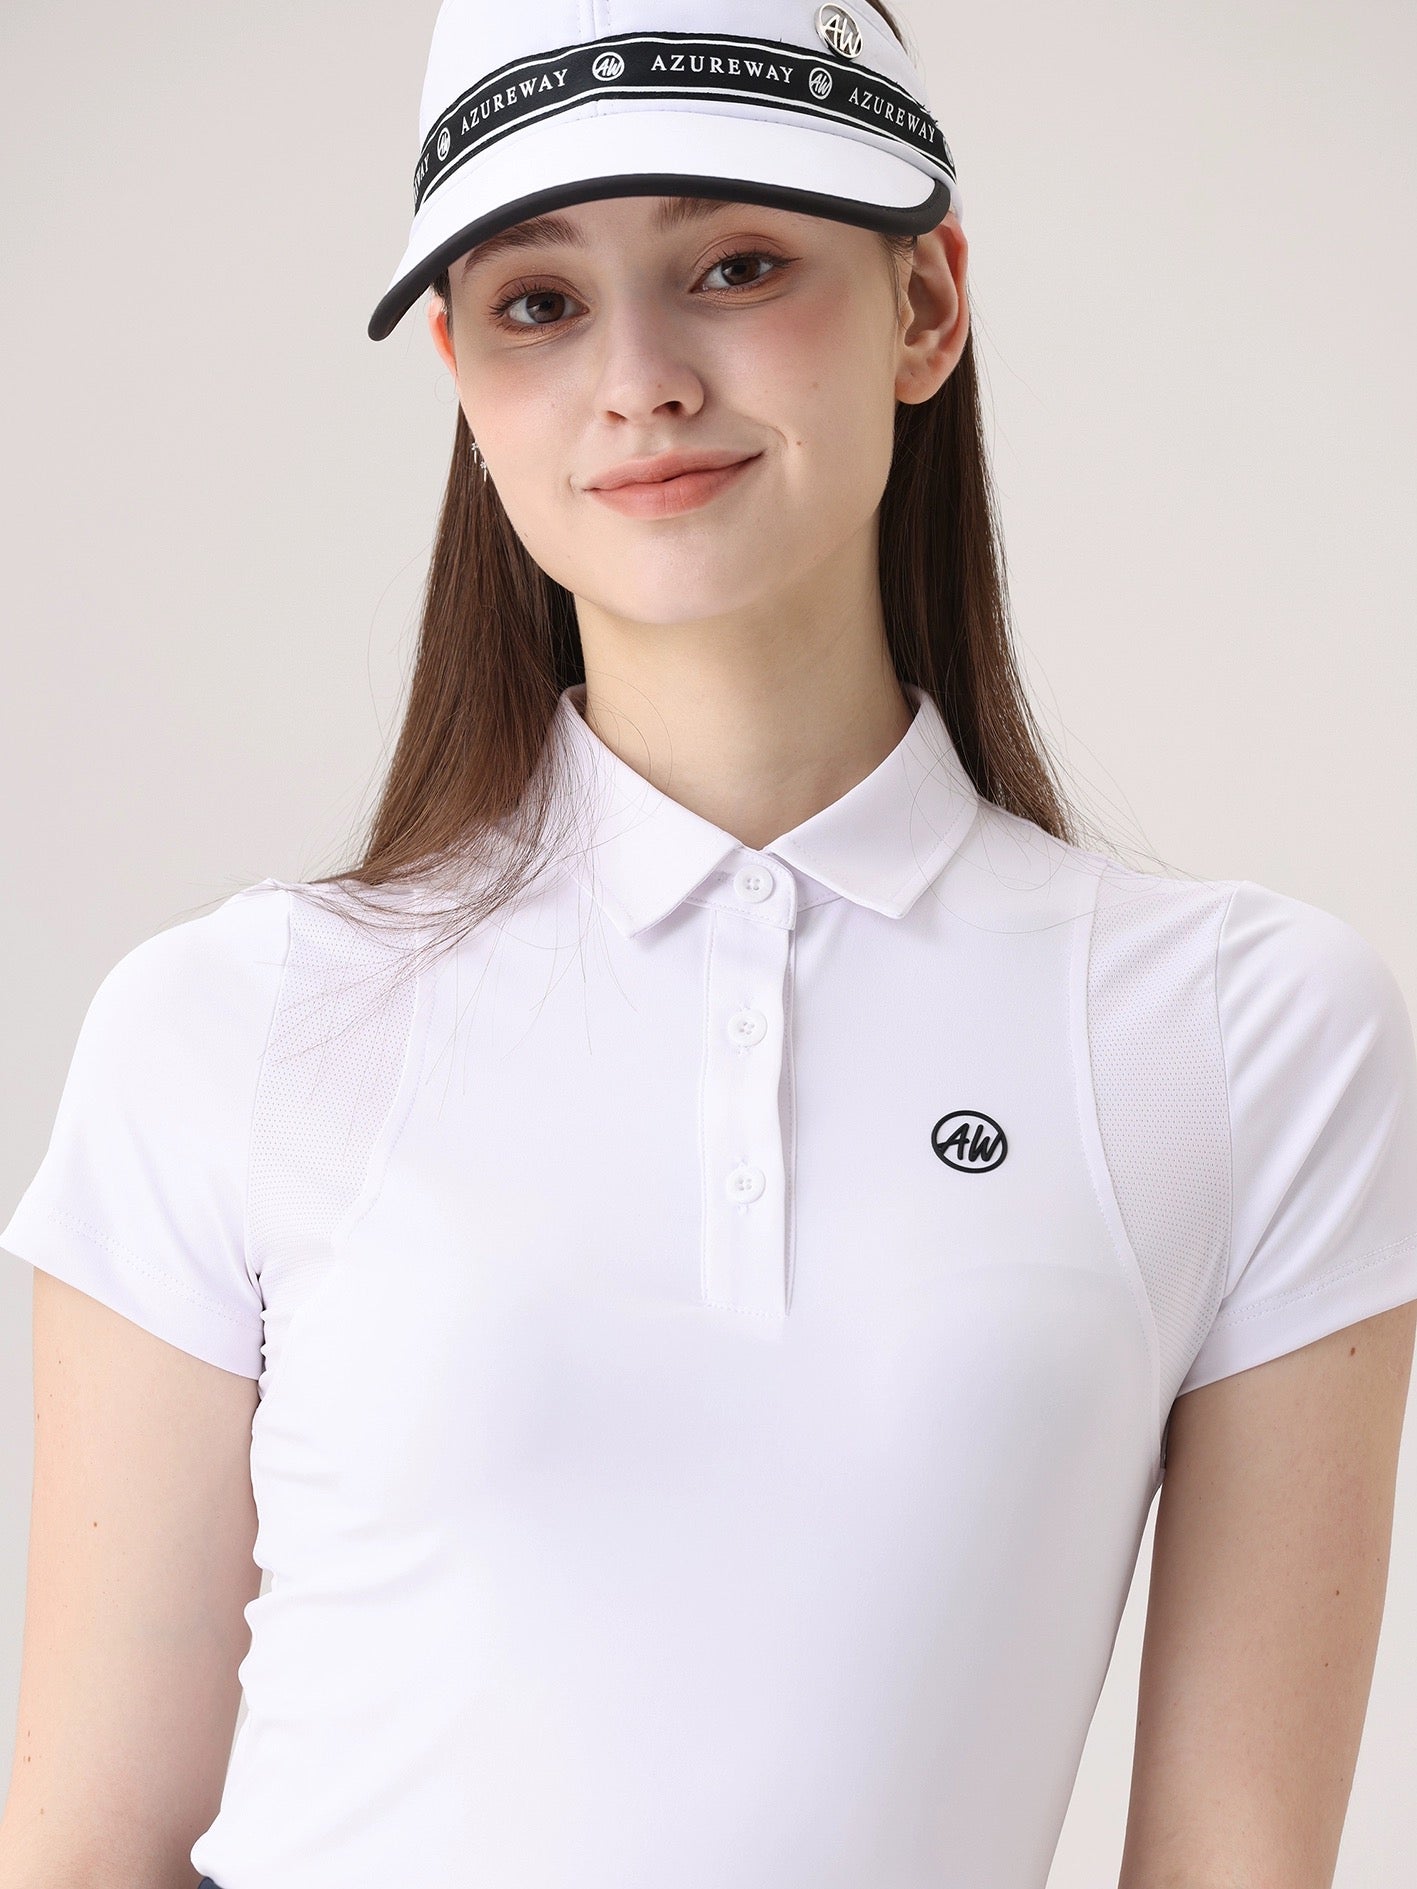 Azureway Summer Golf Ladies Shirt AW-T4105